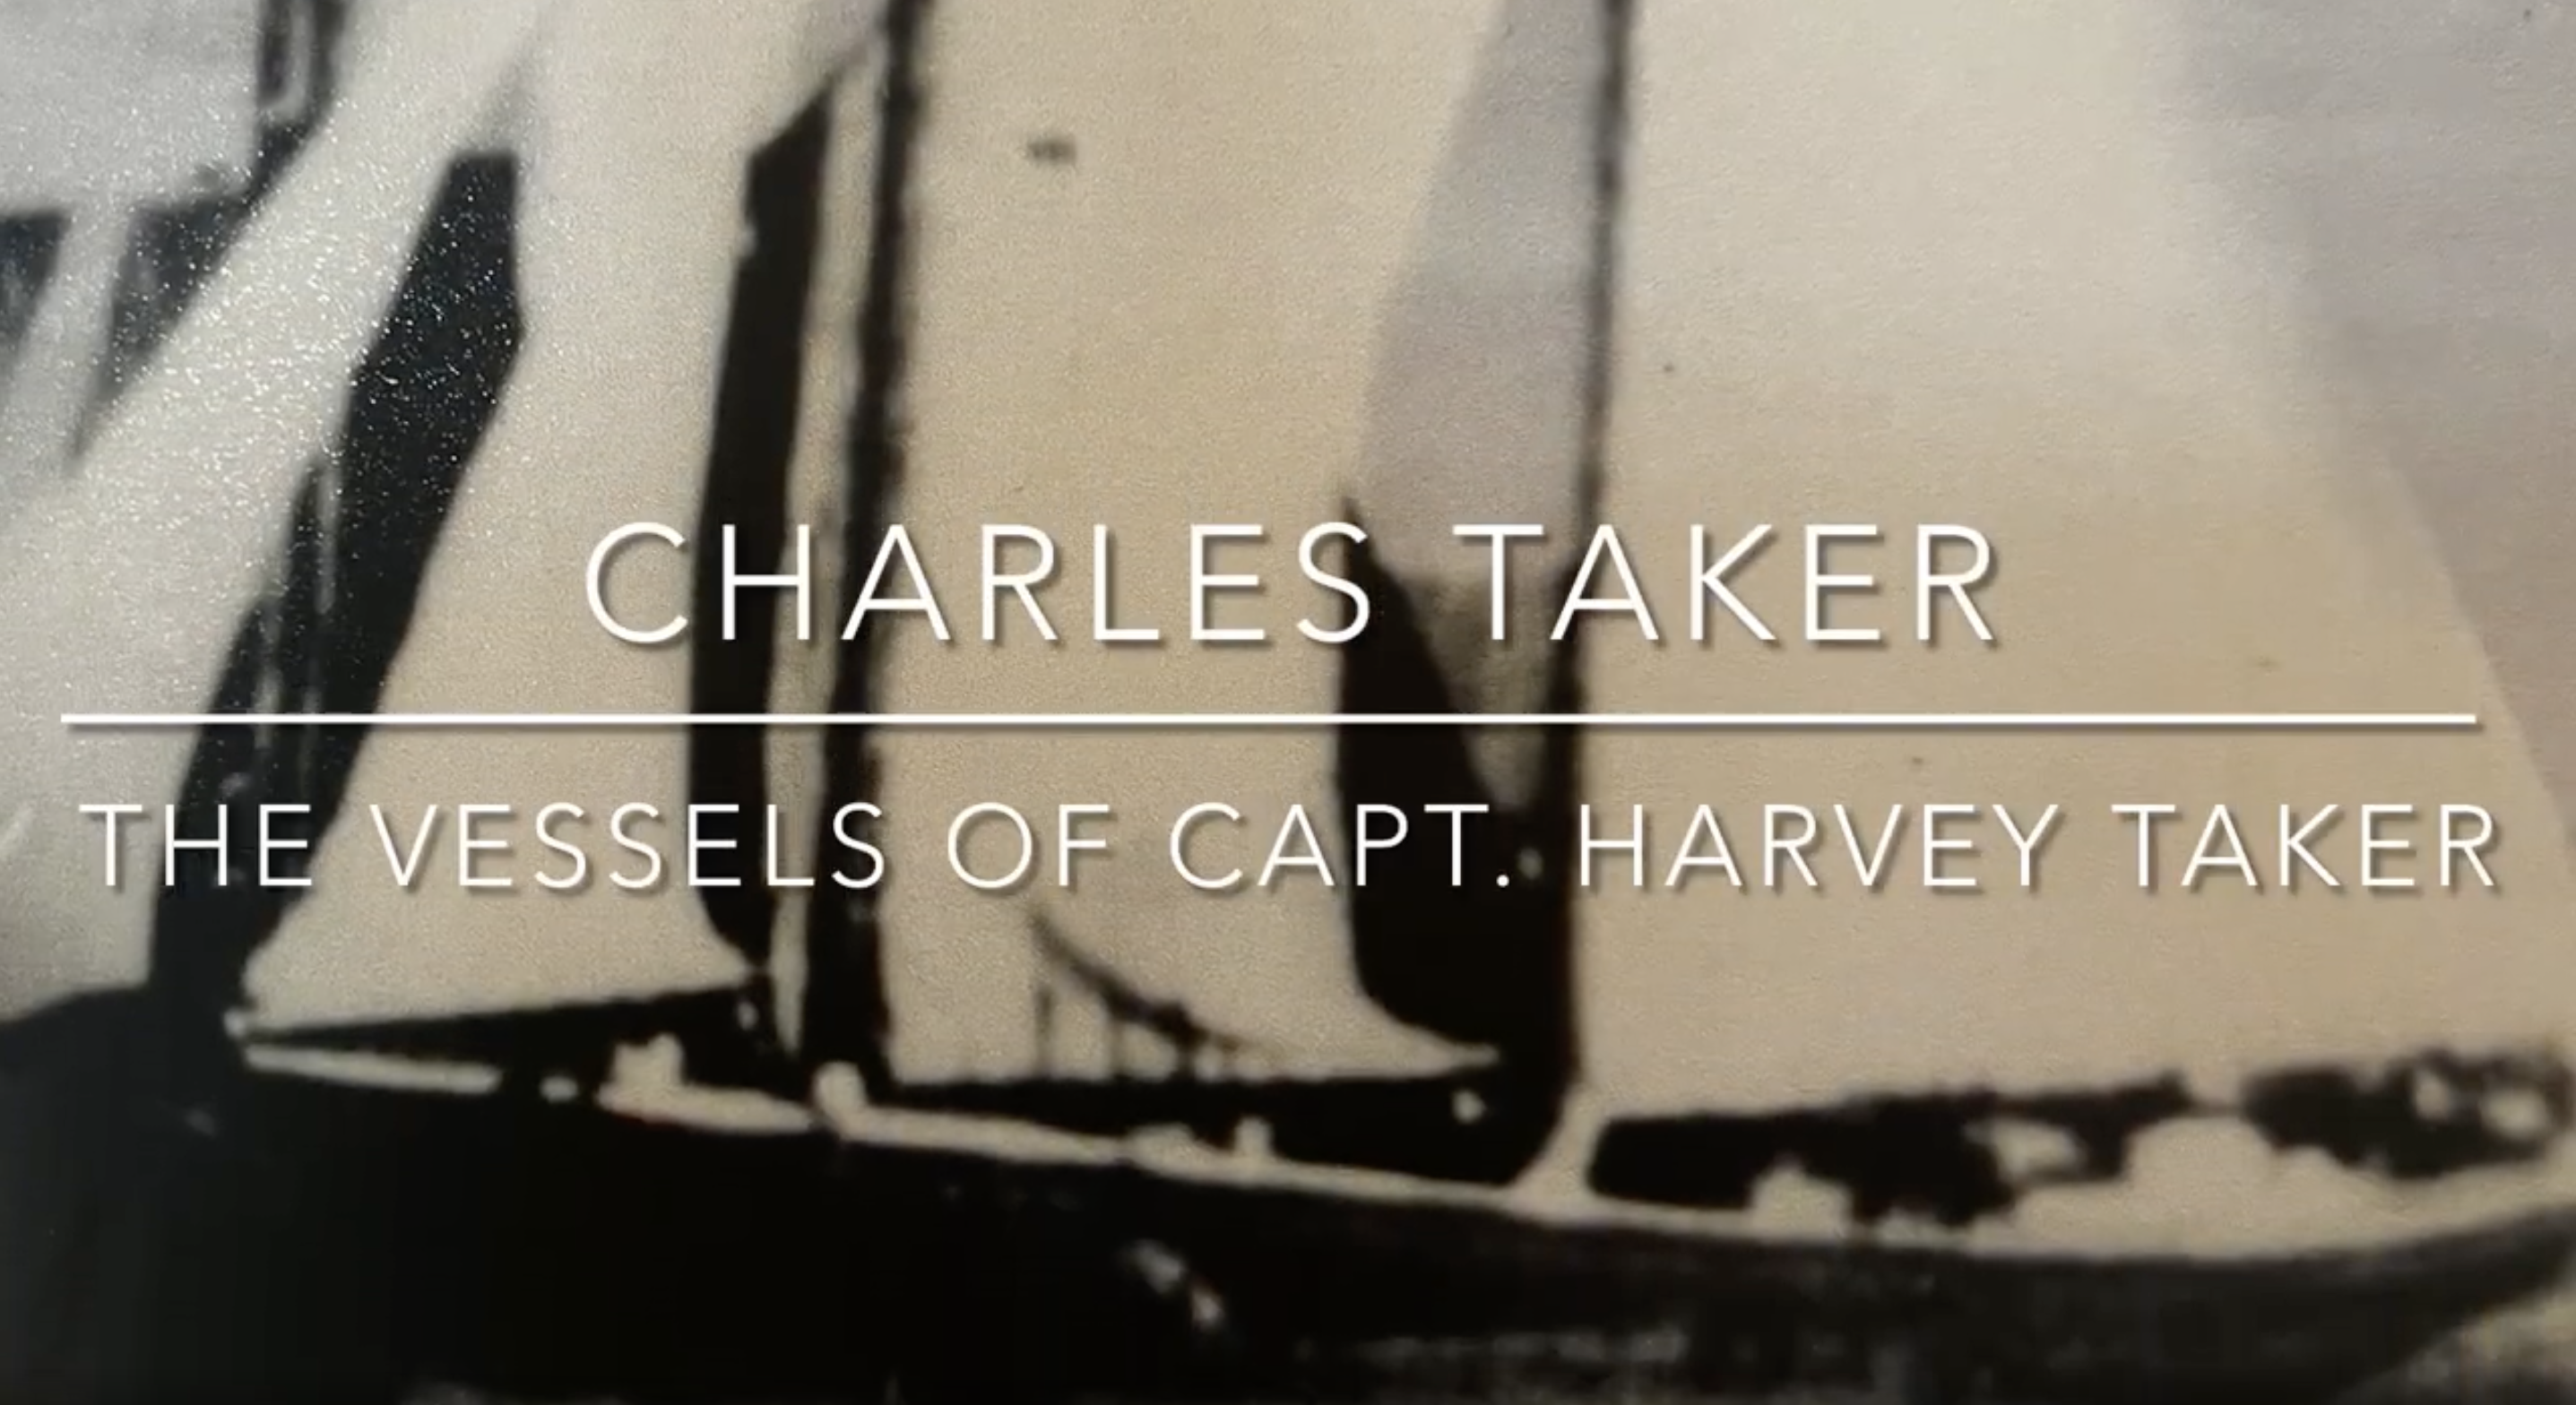 Charles Taker - The Vessels of Capt. Harvey Taker